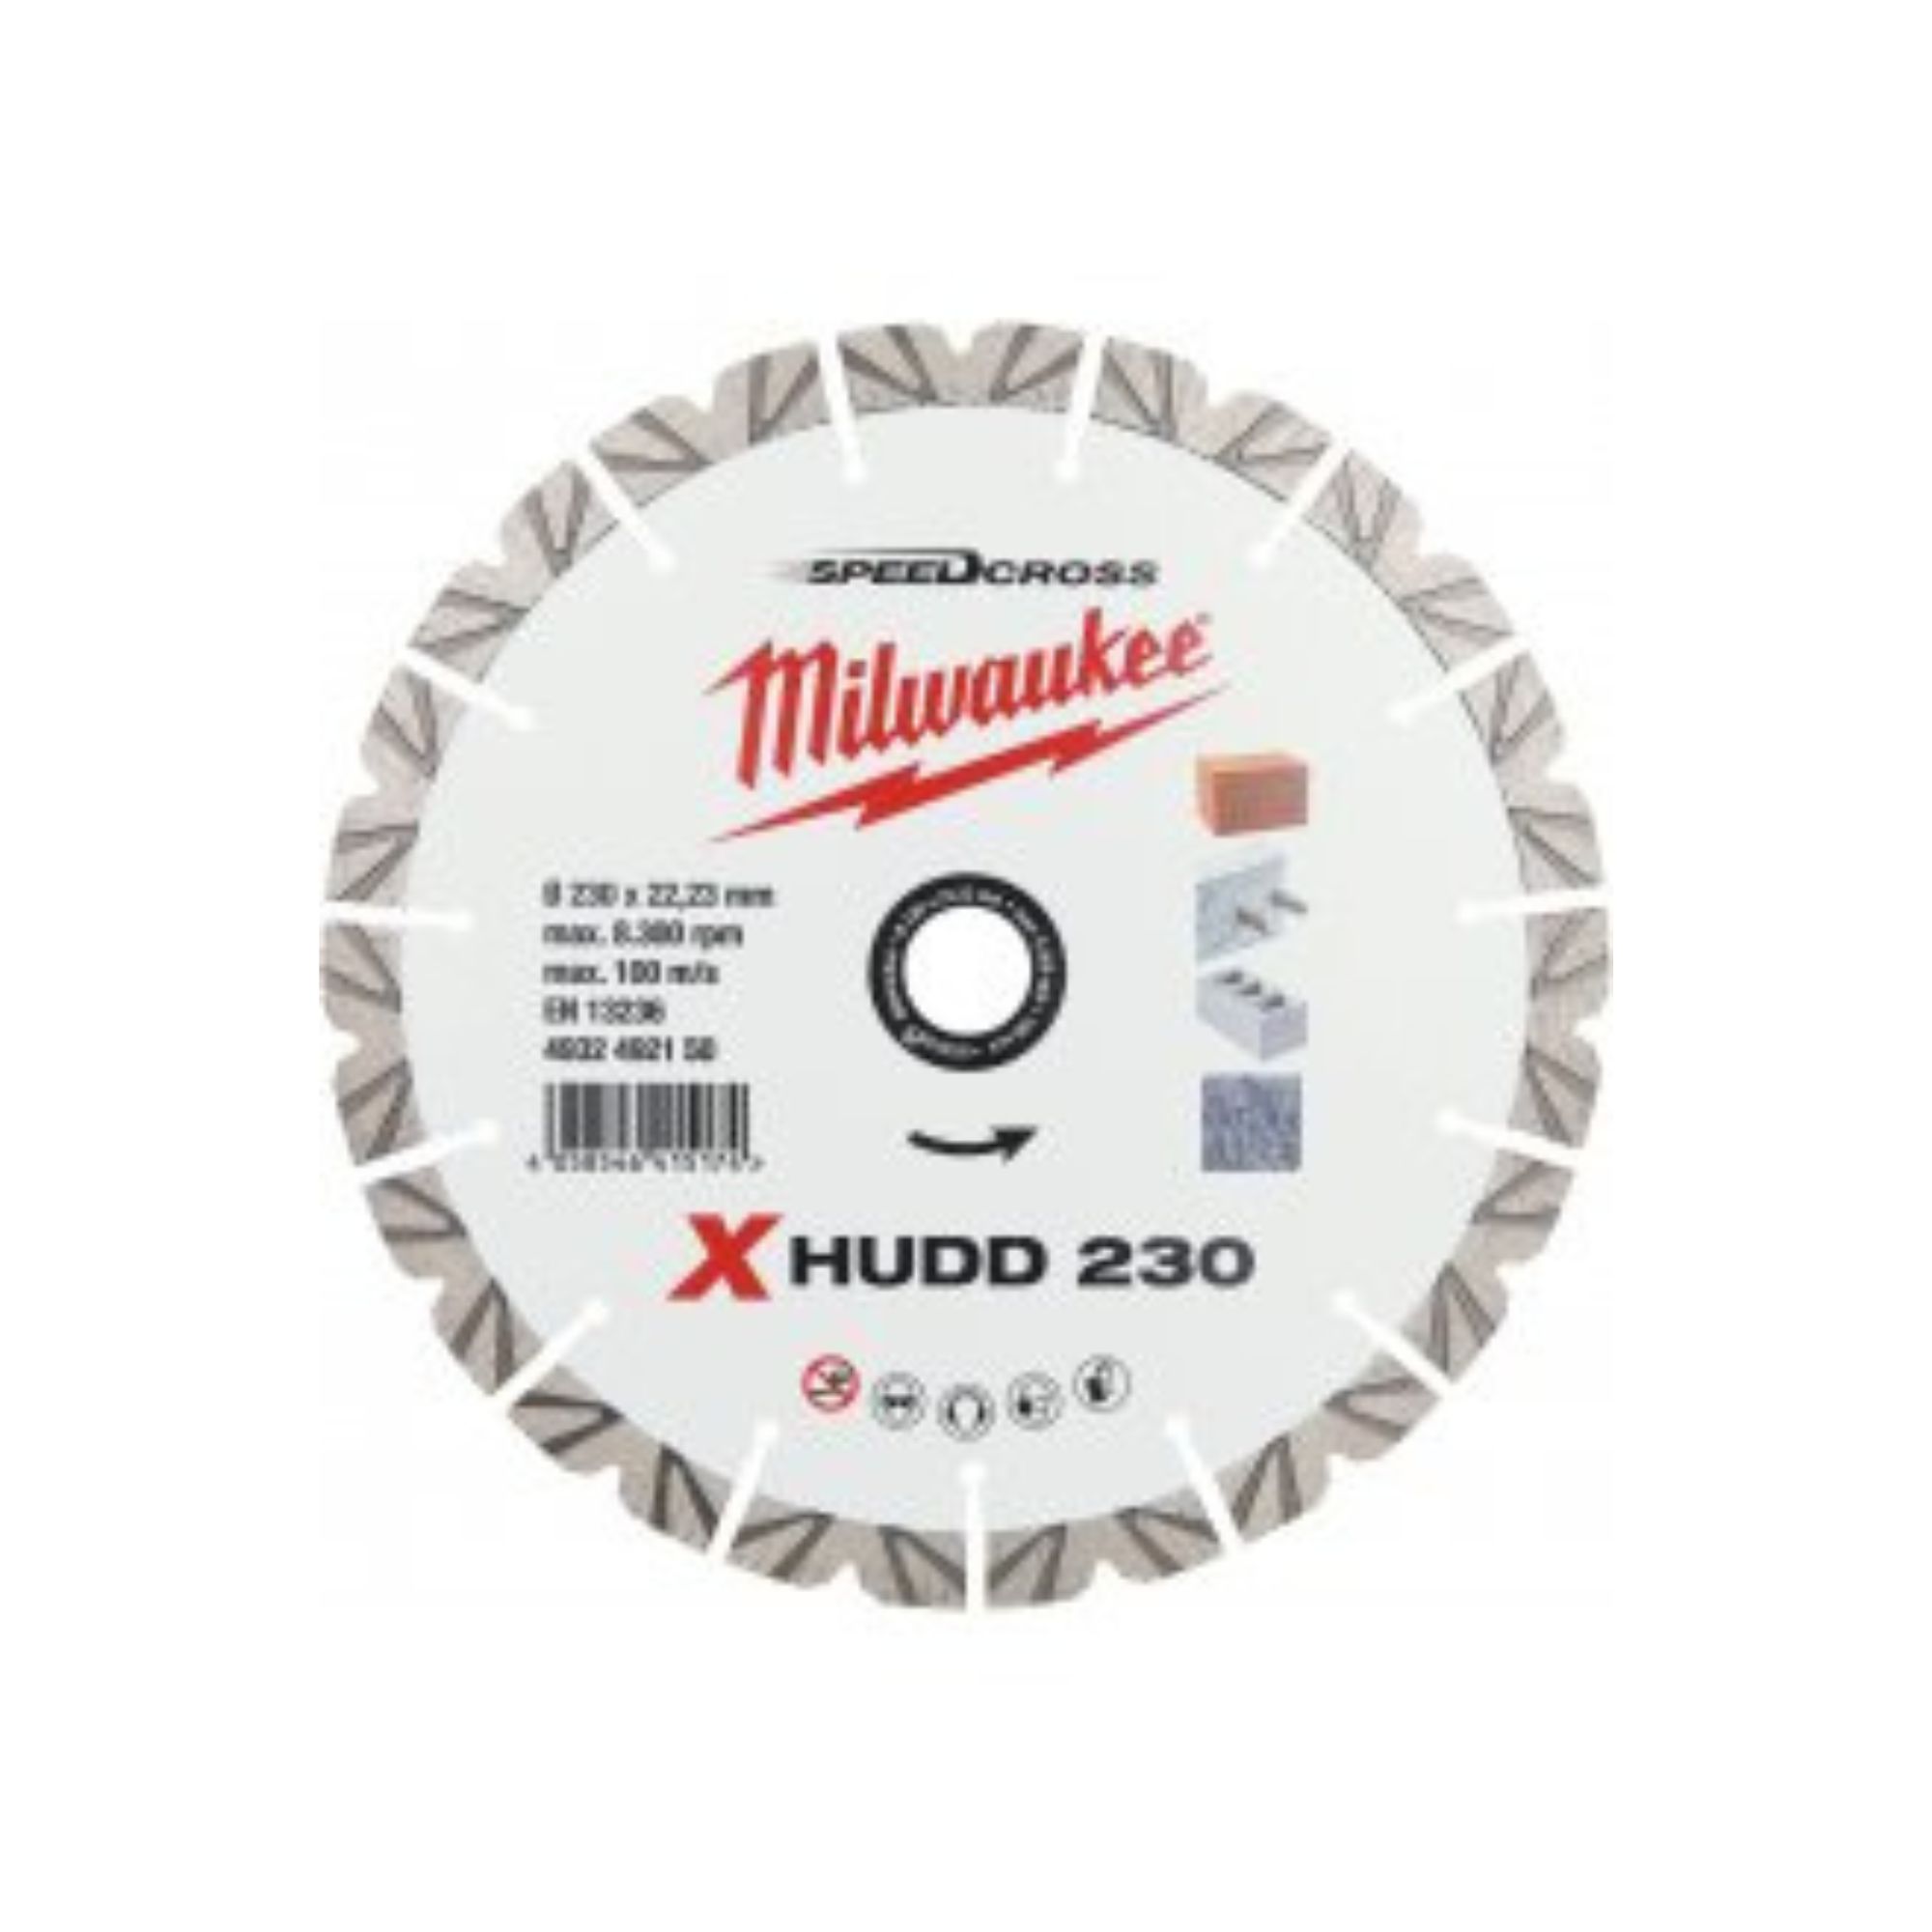 Disco diamante Speedcros s xhuud 230mm Milwaukee